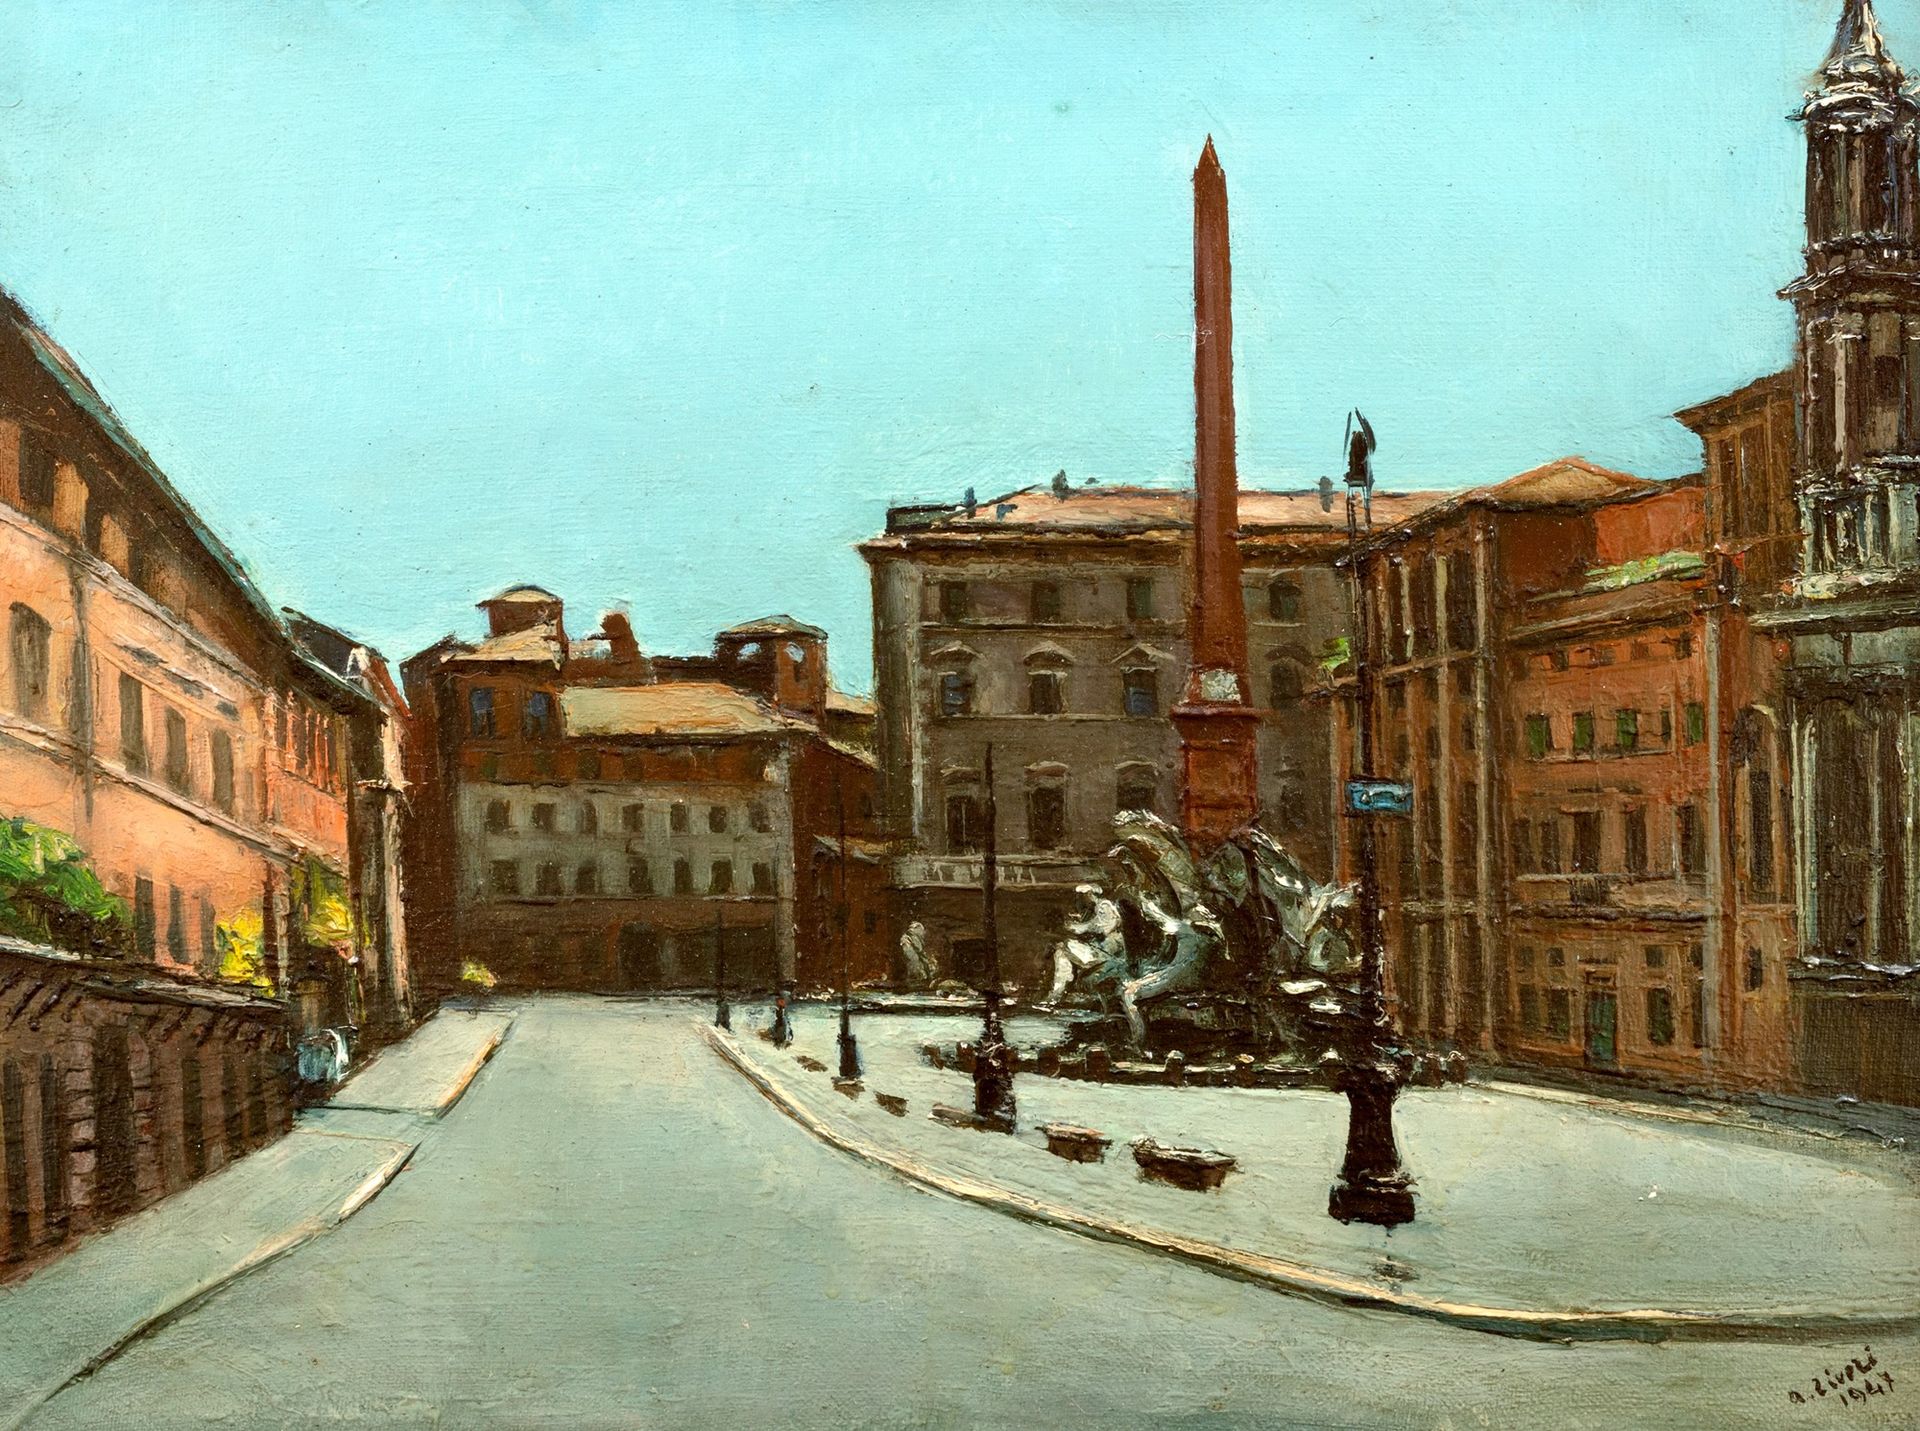 ALBERTO ZIVERI 纳沃纳广场，1947年

布面油画
50 x 60 cm
右下方签名：A. Ziveri, 47

展览
 

罗马，Rome A&hellip;